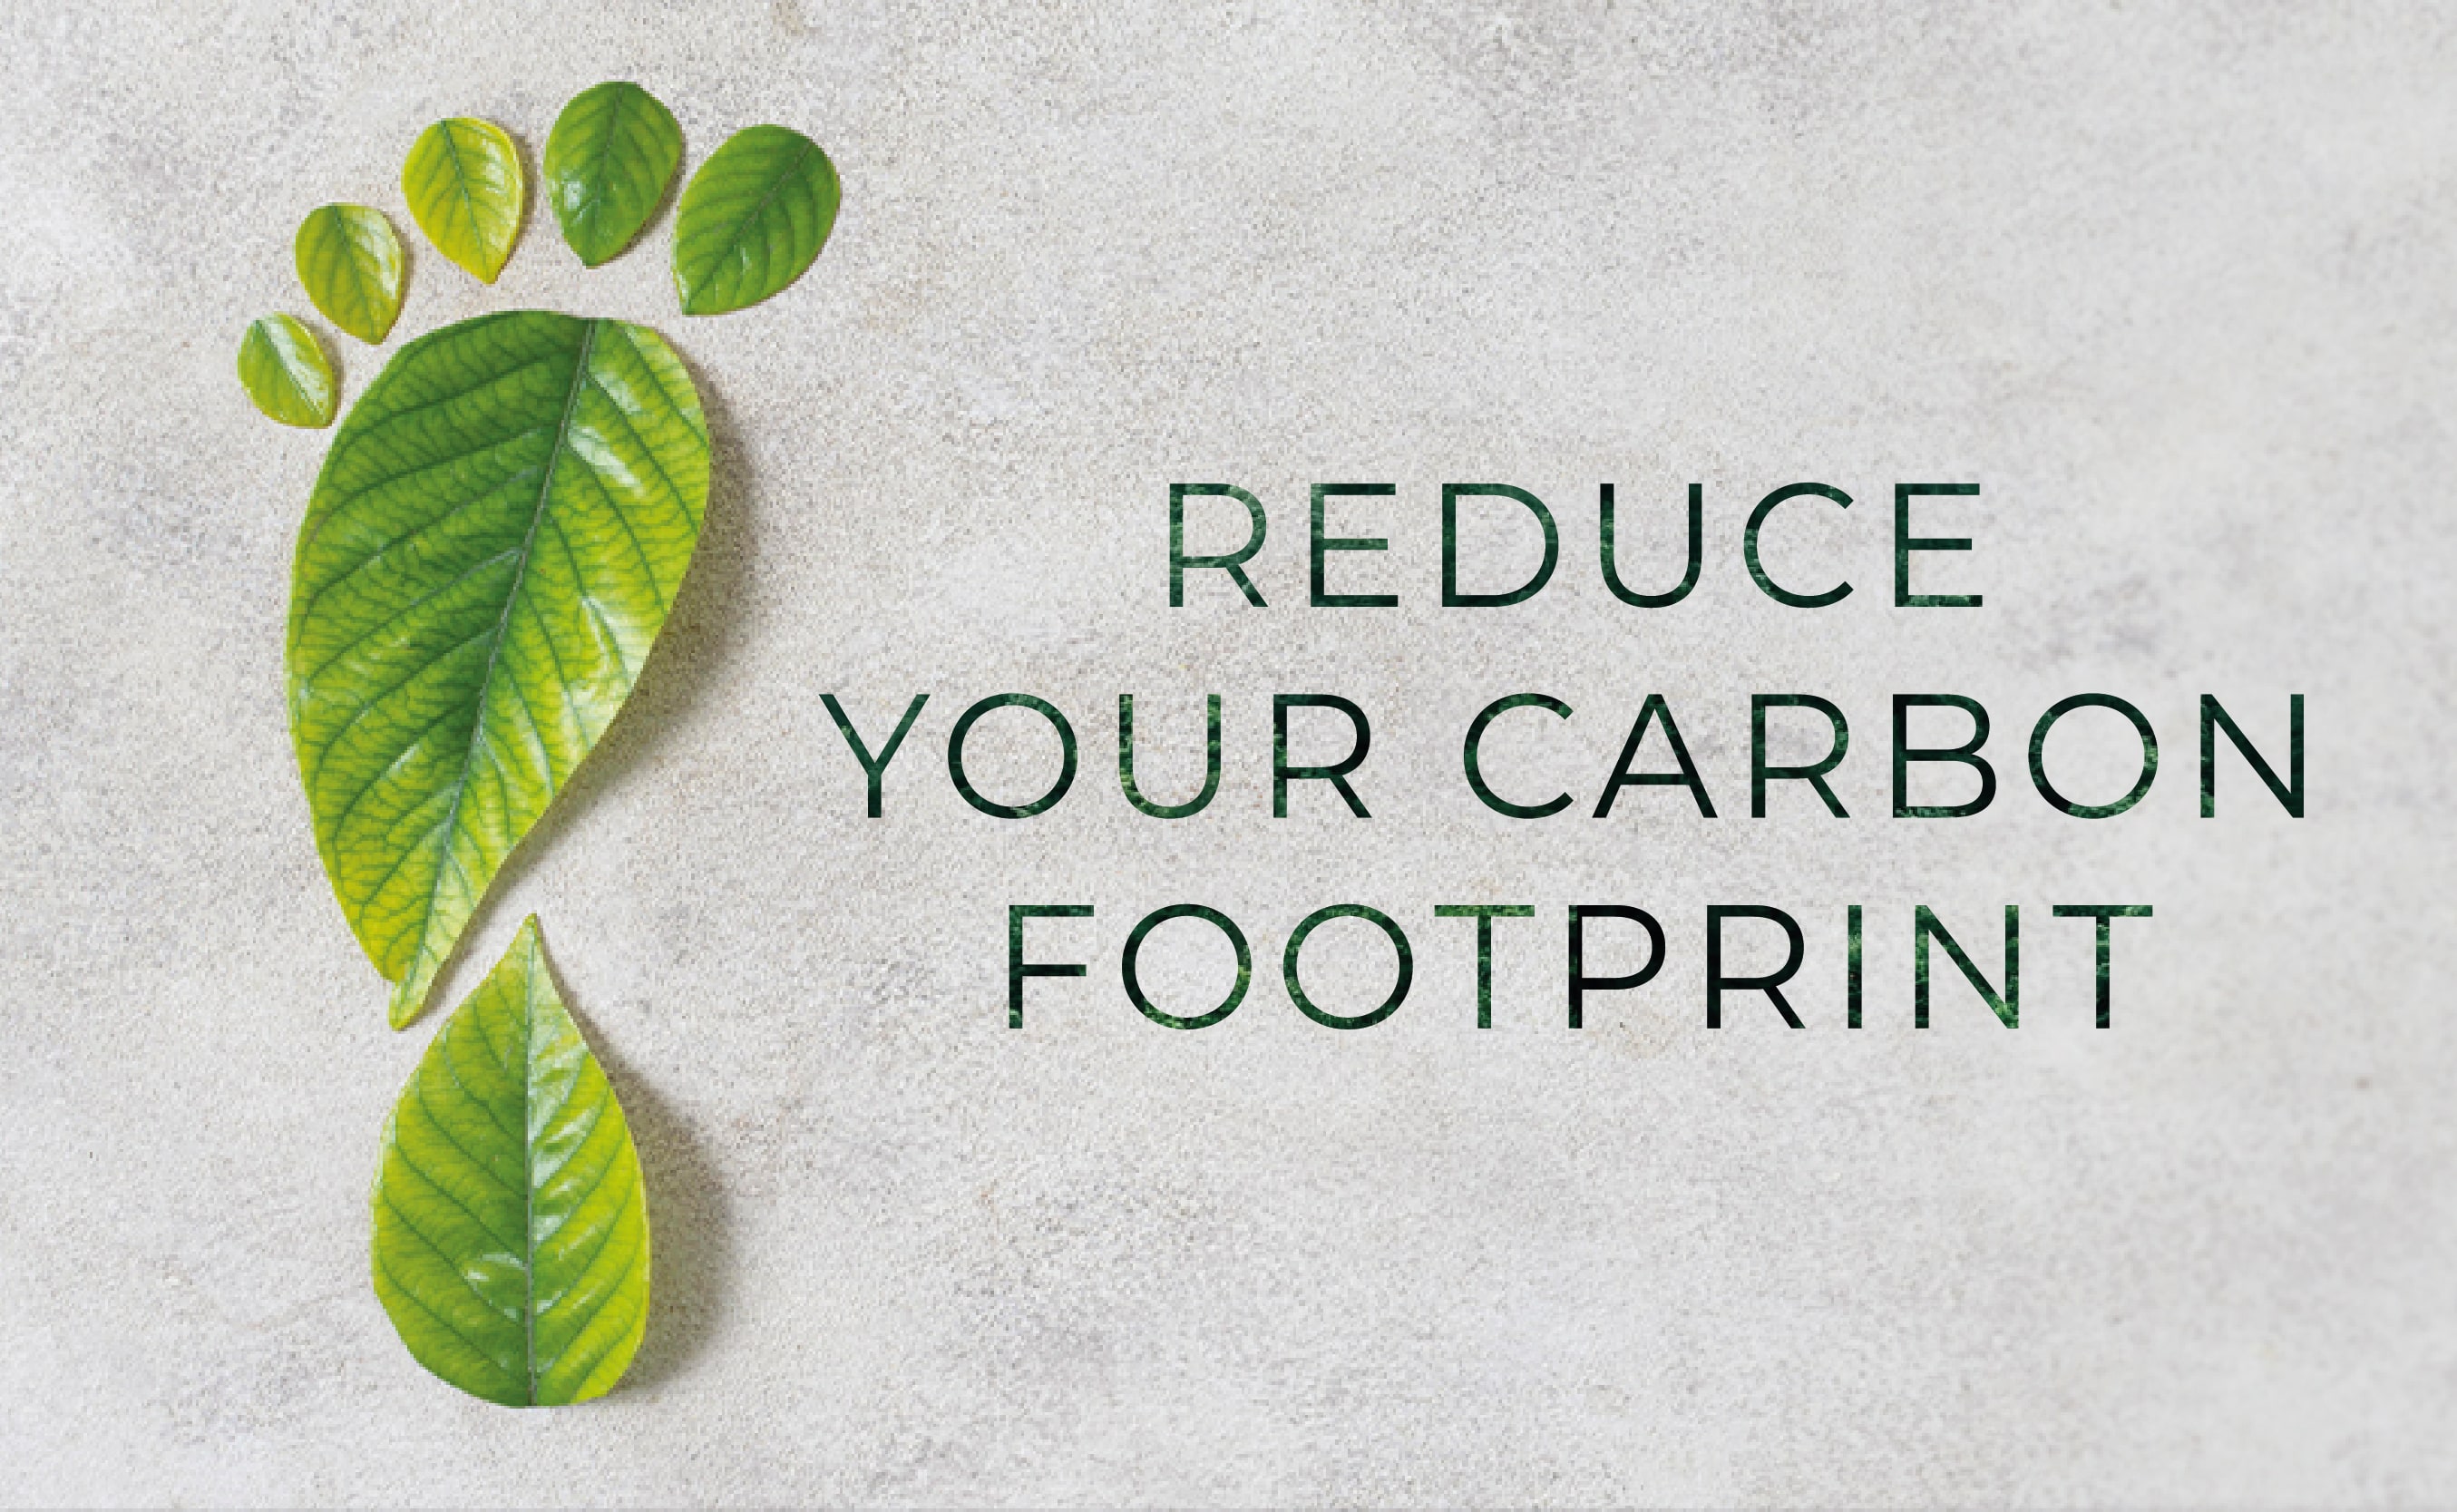 Reduce_Carbon_Footprint-03-min.jpg